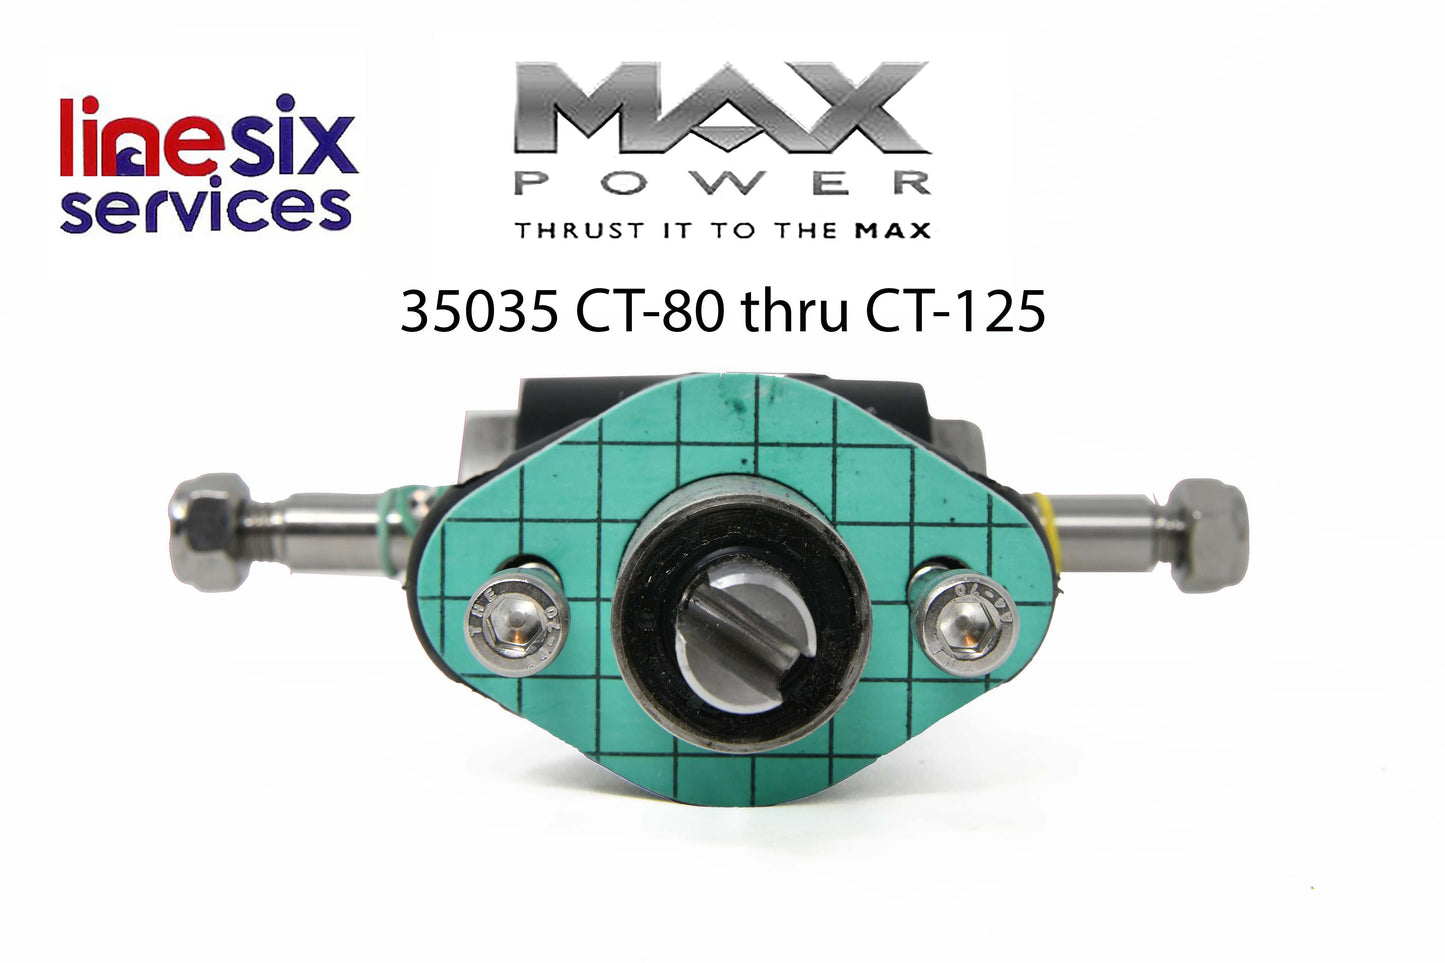 Max-Power 35035 Gearleg Assy for CT-80 thru CT-125 Thrusters